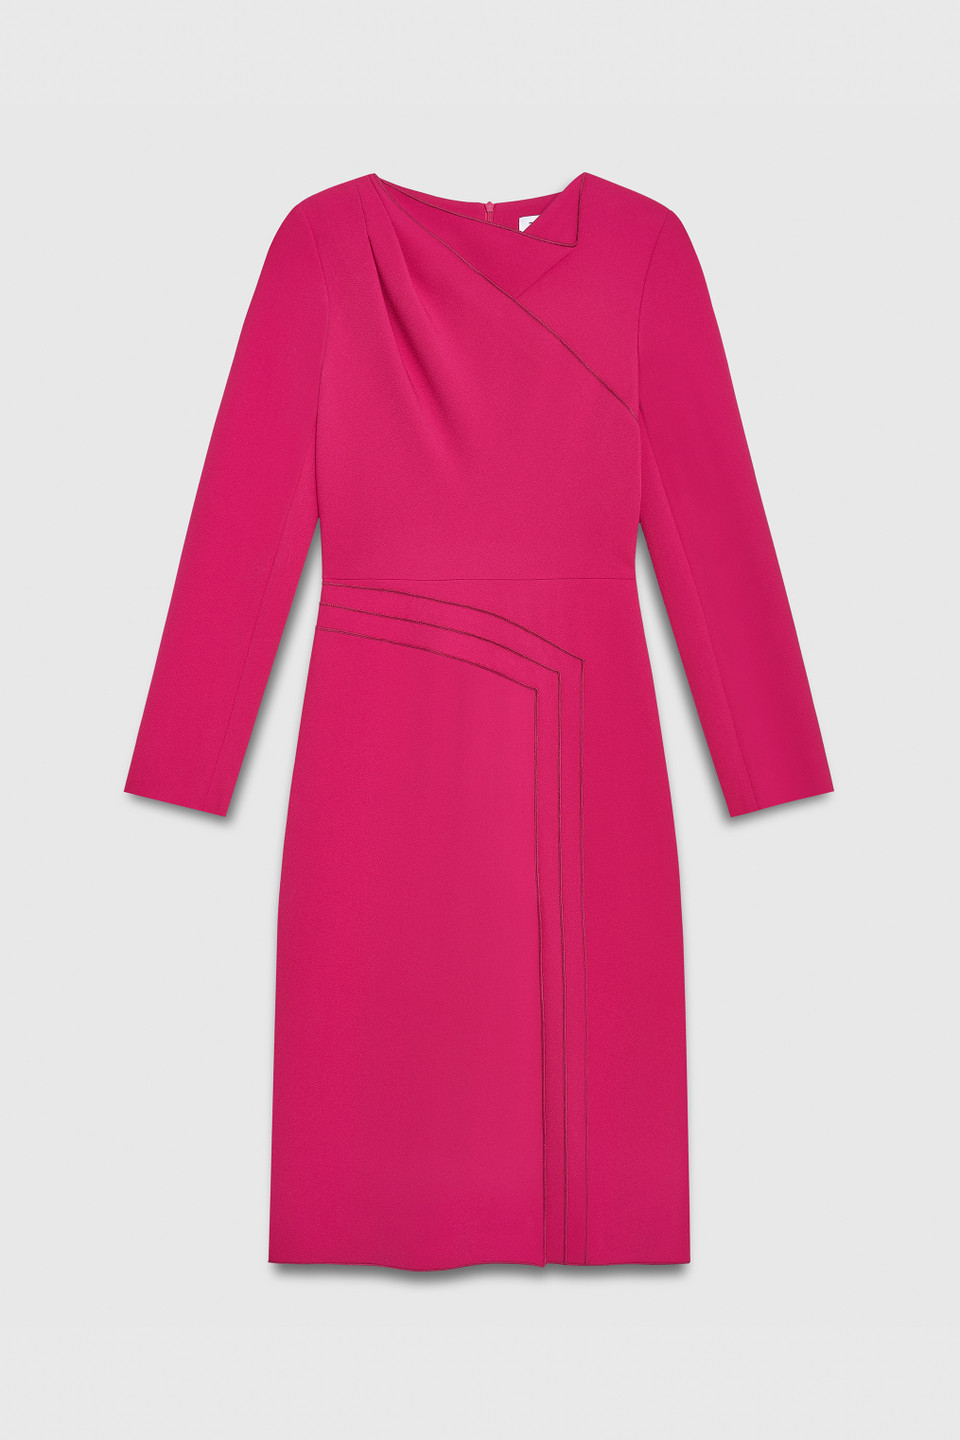 Elland Dress Cerise Pink Sculpt Stretch Crepe - Welcome to the Fold LTD